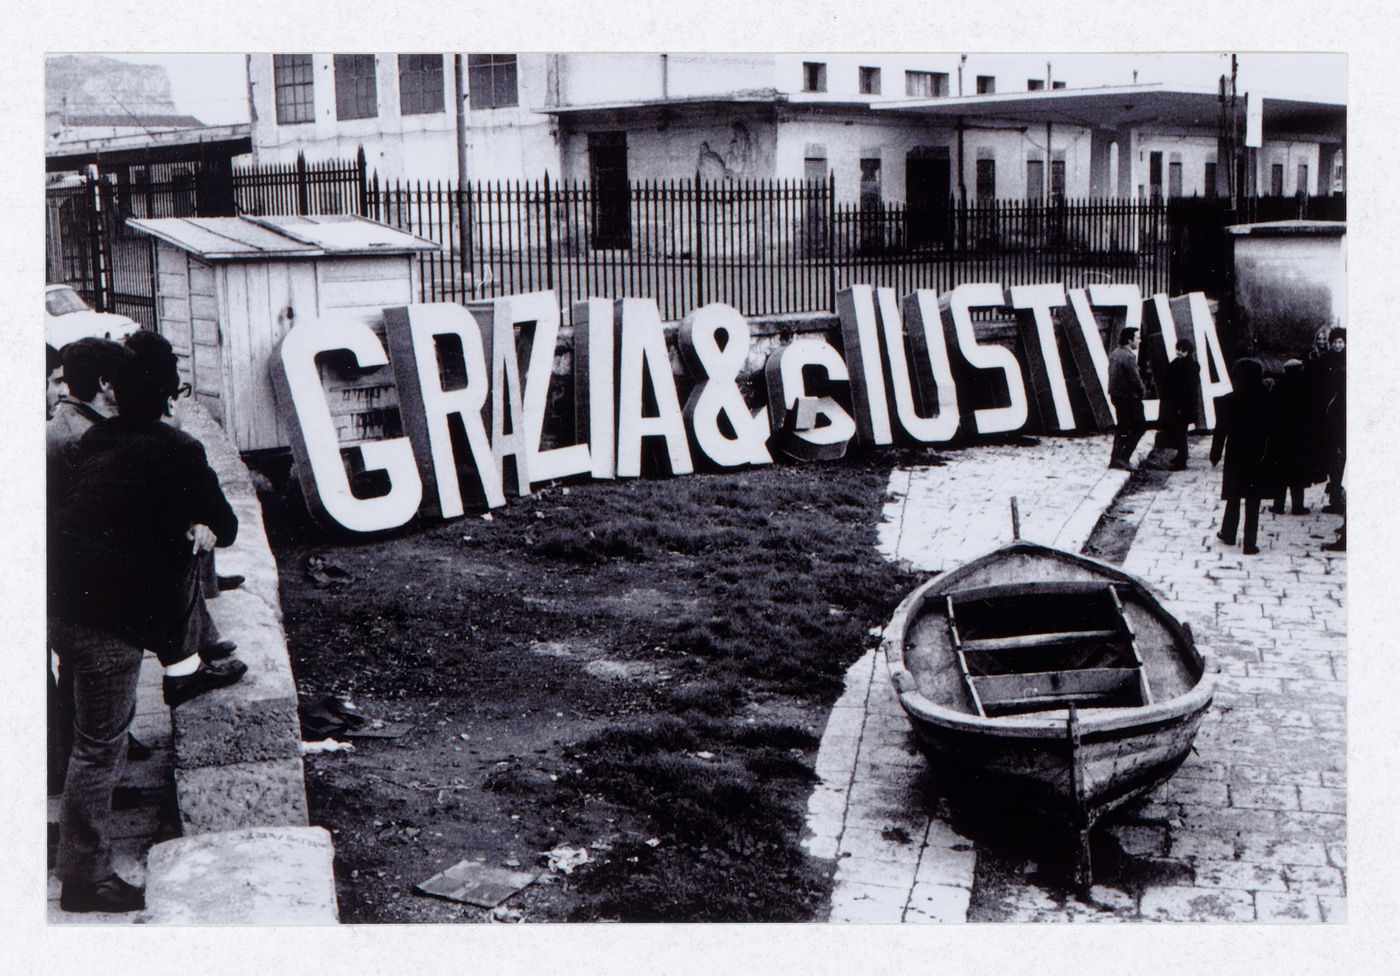 Photograph of the installation before been thrown in the sea for Grazia & Giustizia